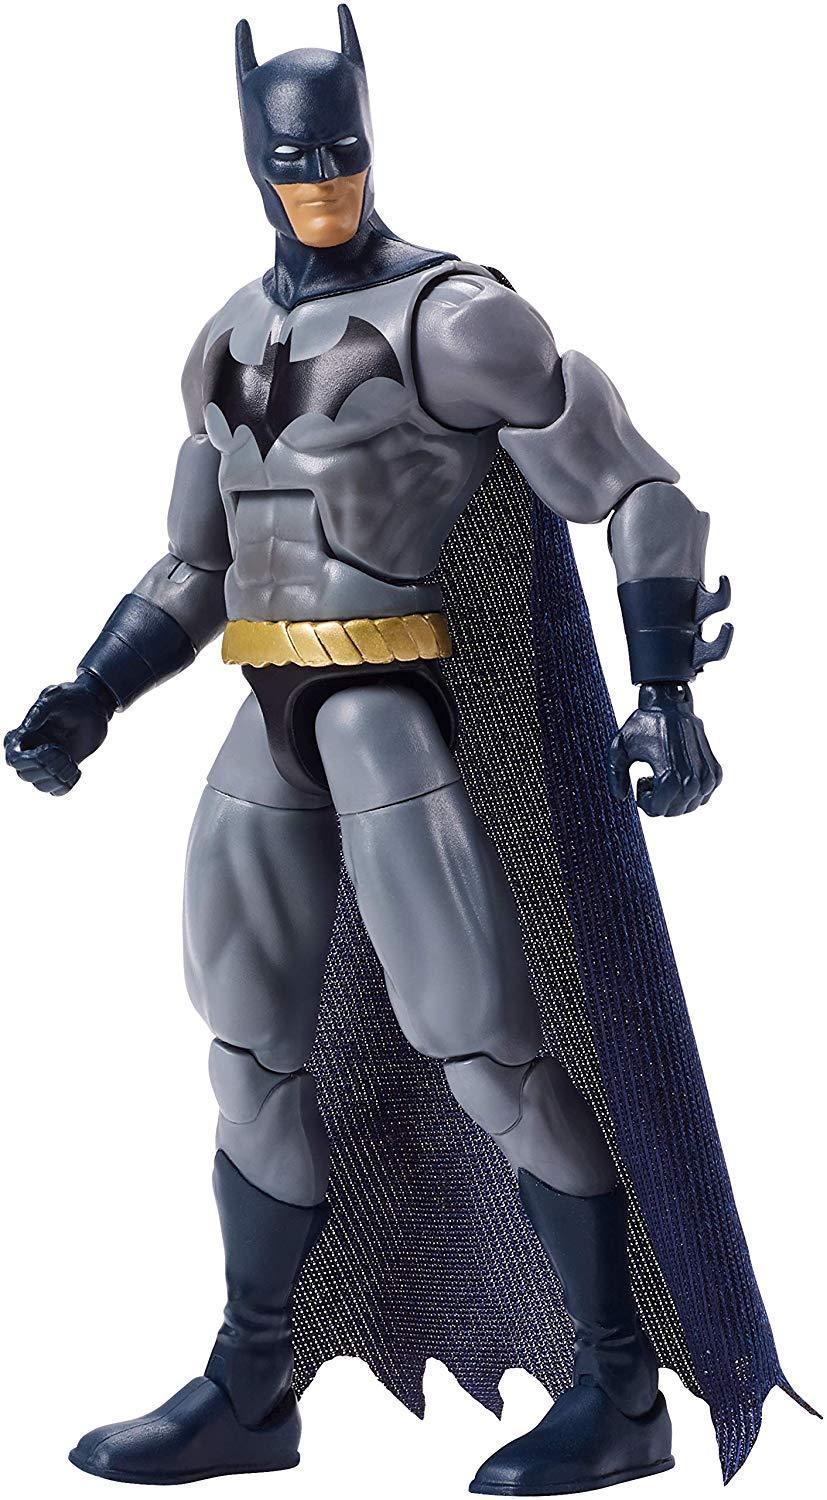 DC Comics Multiverse Batman Figure